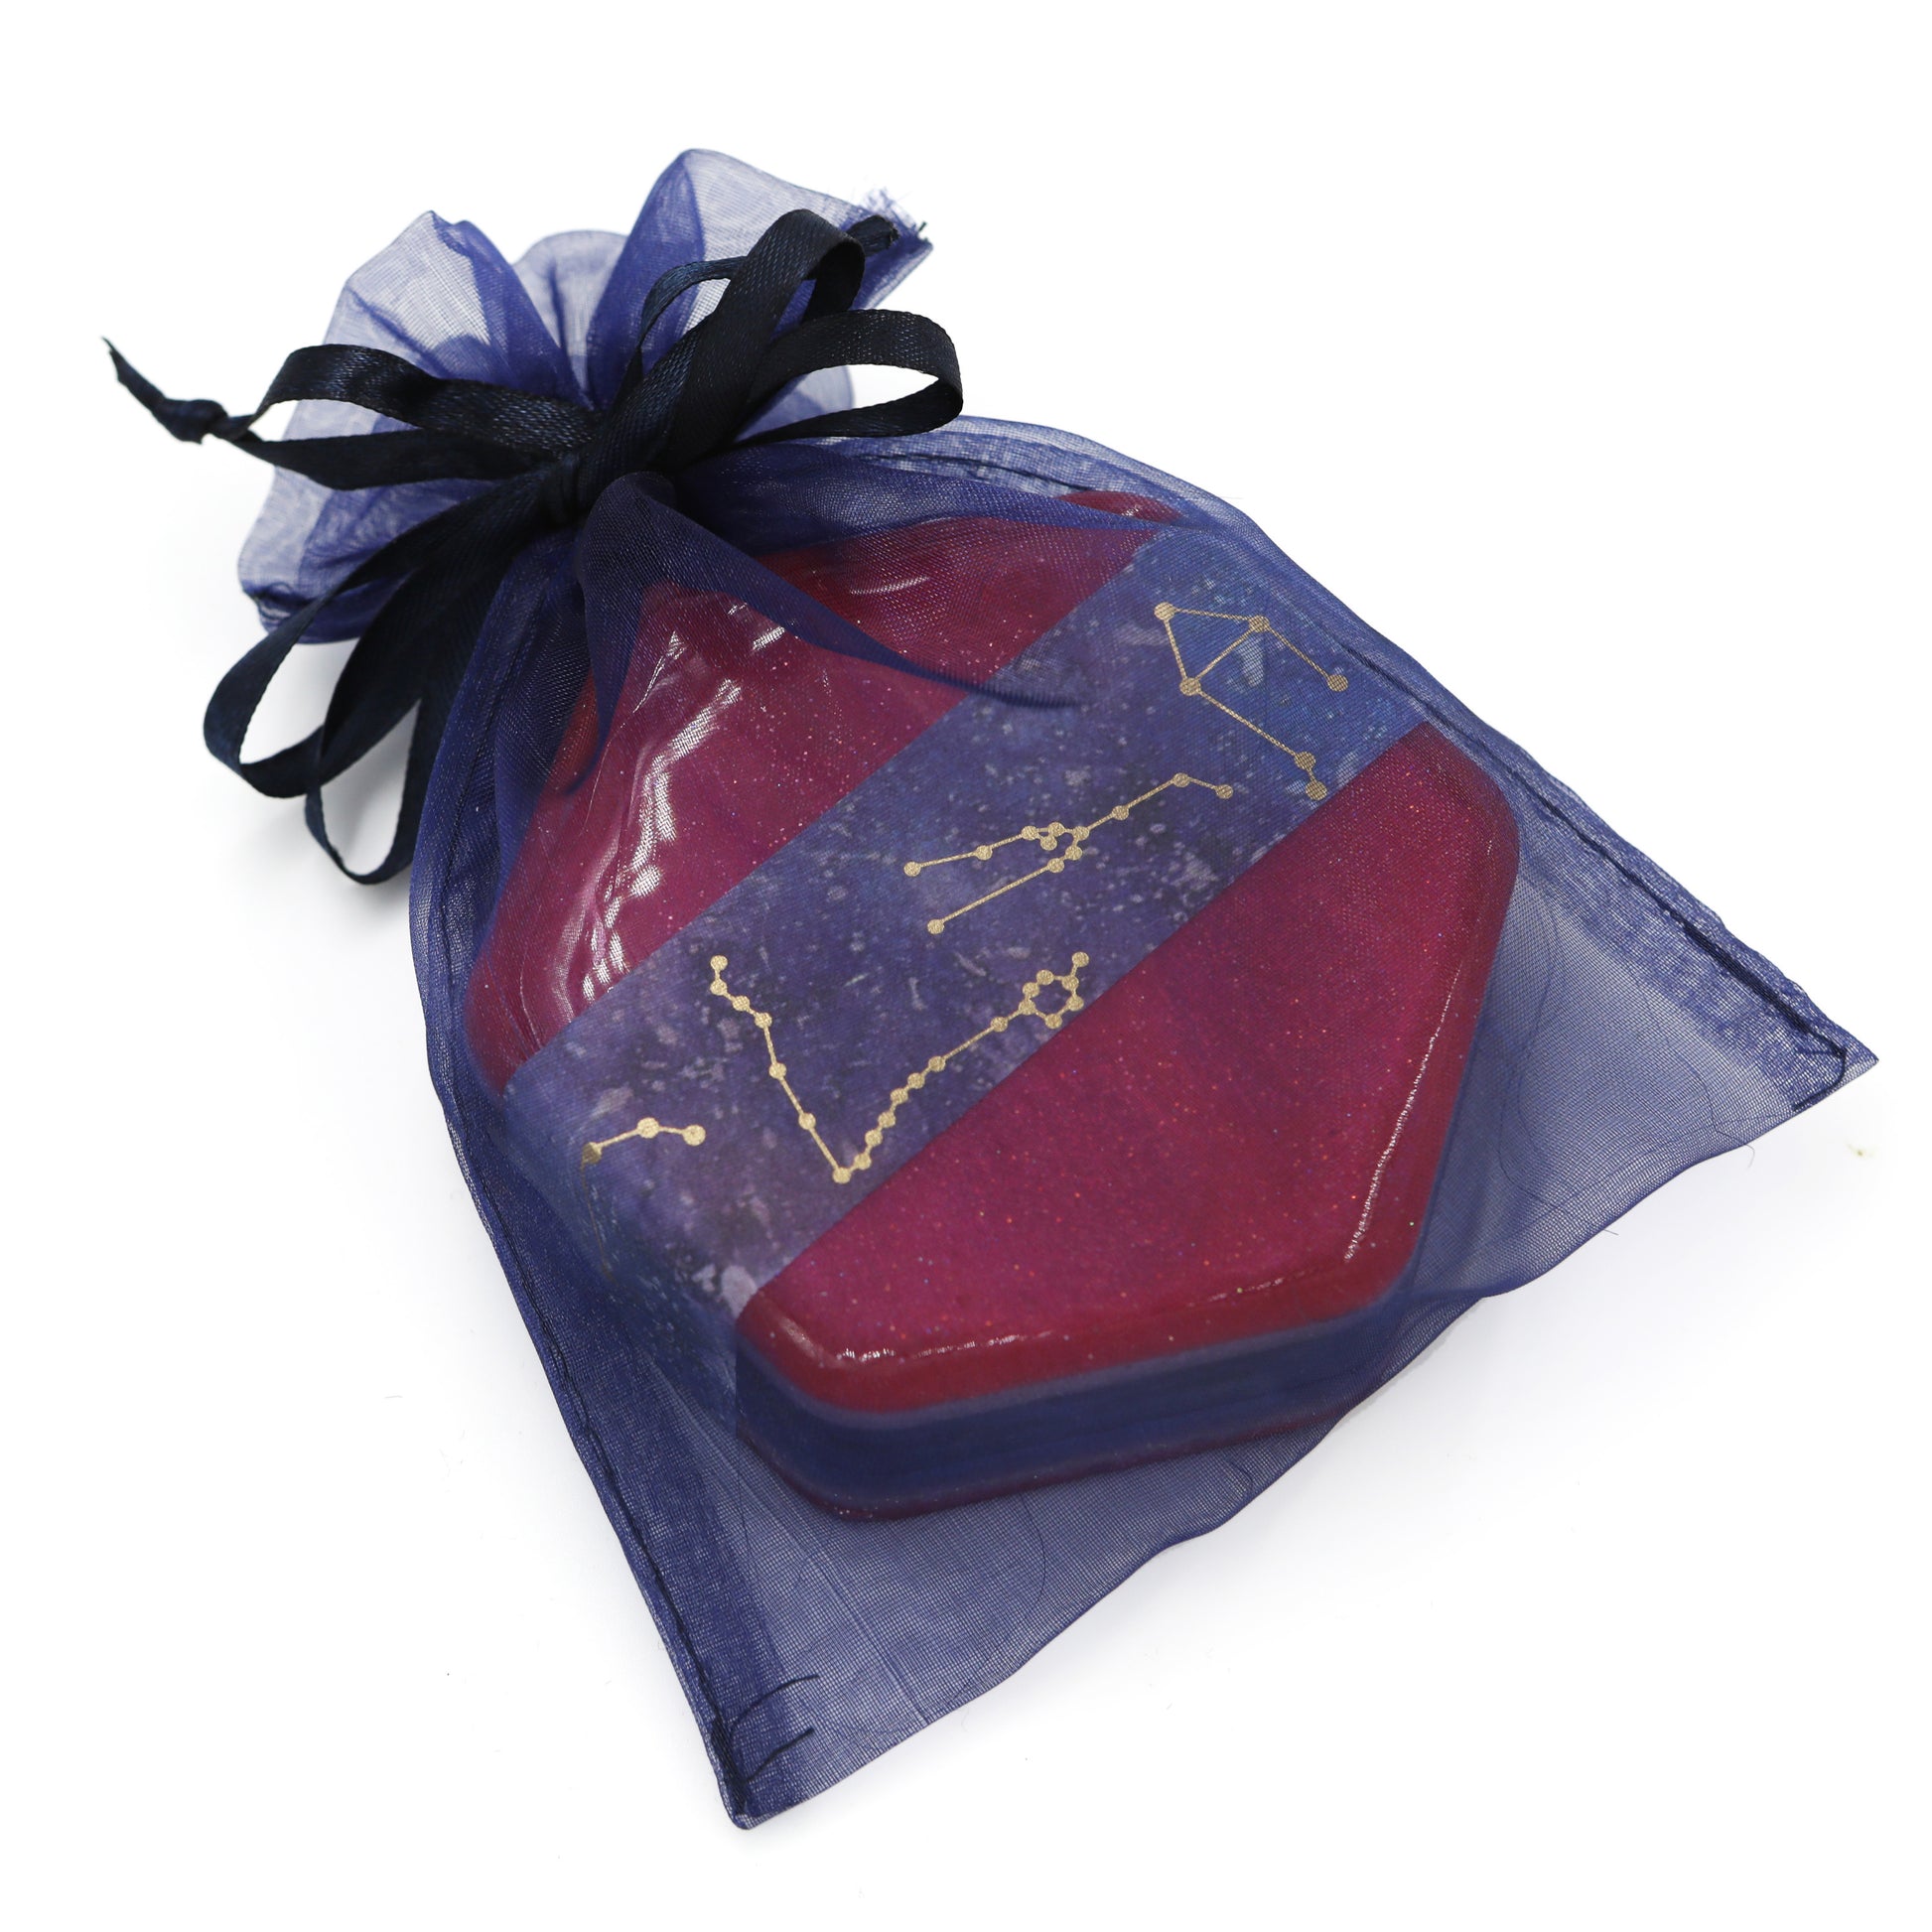 Hexagonal acrylic dice box in purple mesh gift bag.